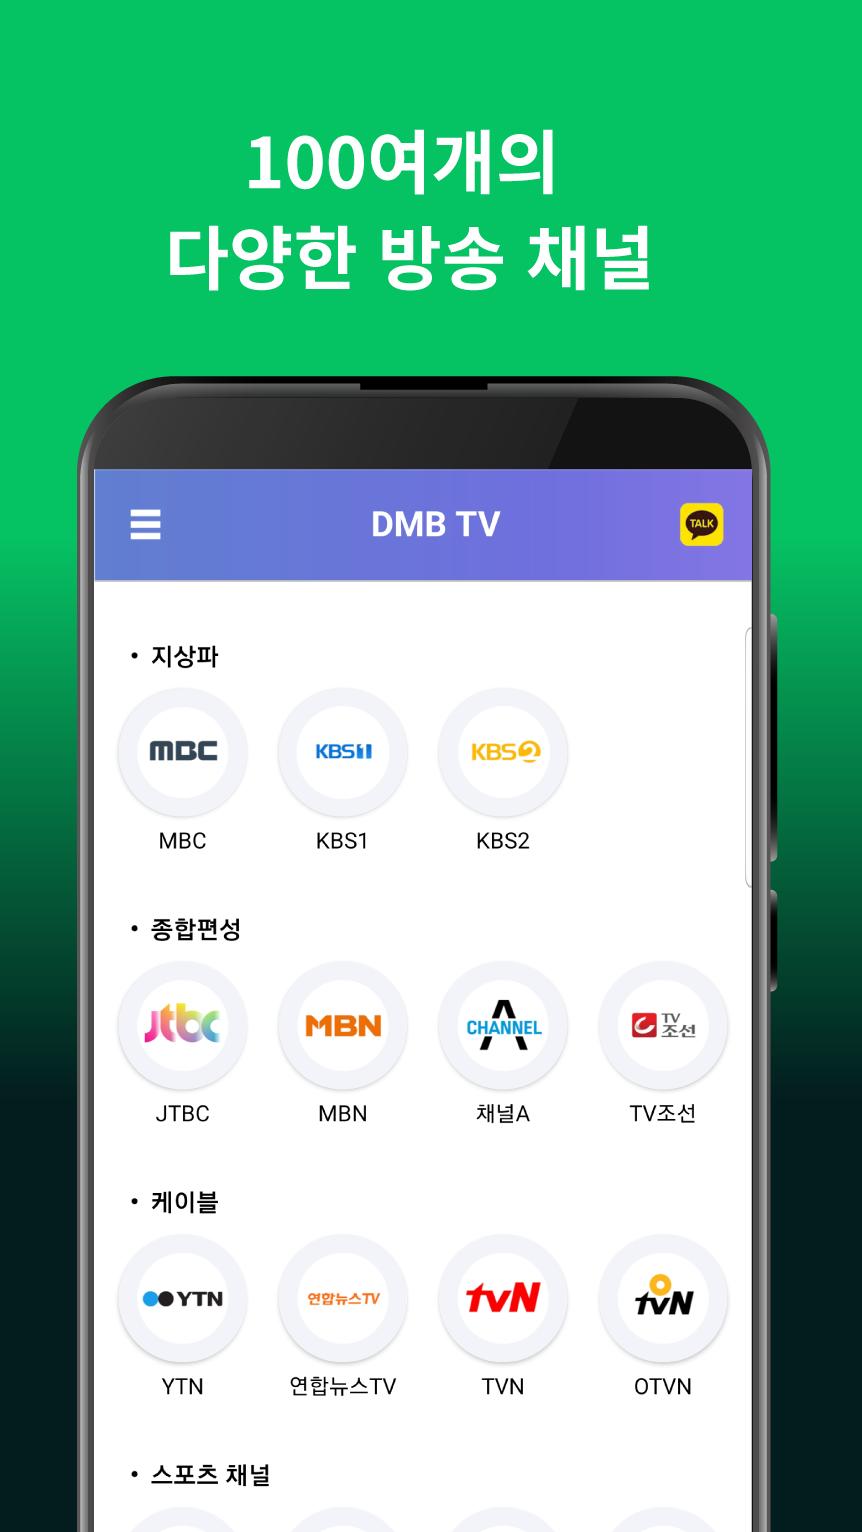 DMB TV 실시간무료TV, 실시간TV 방송, 지상파, 디엠비 방송시청, 모바일 무료티비 1.0.1 Screenshot 7